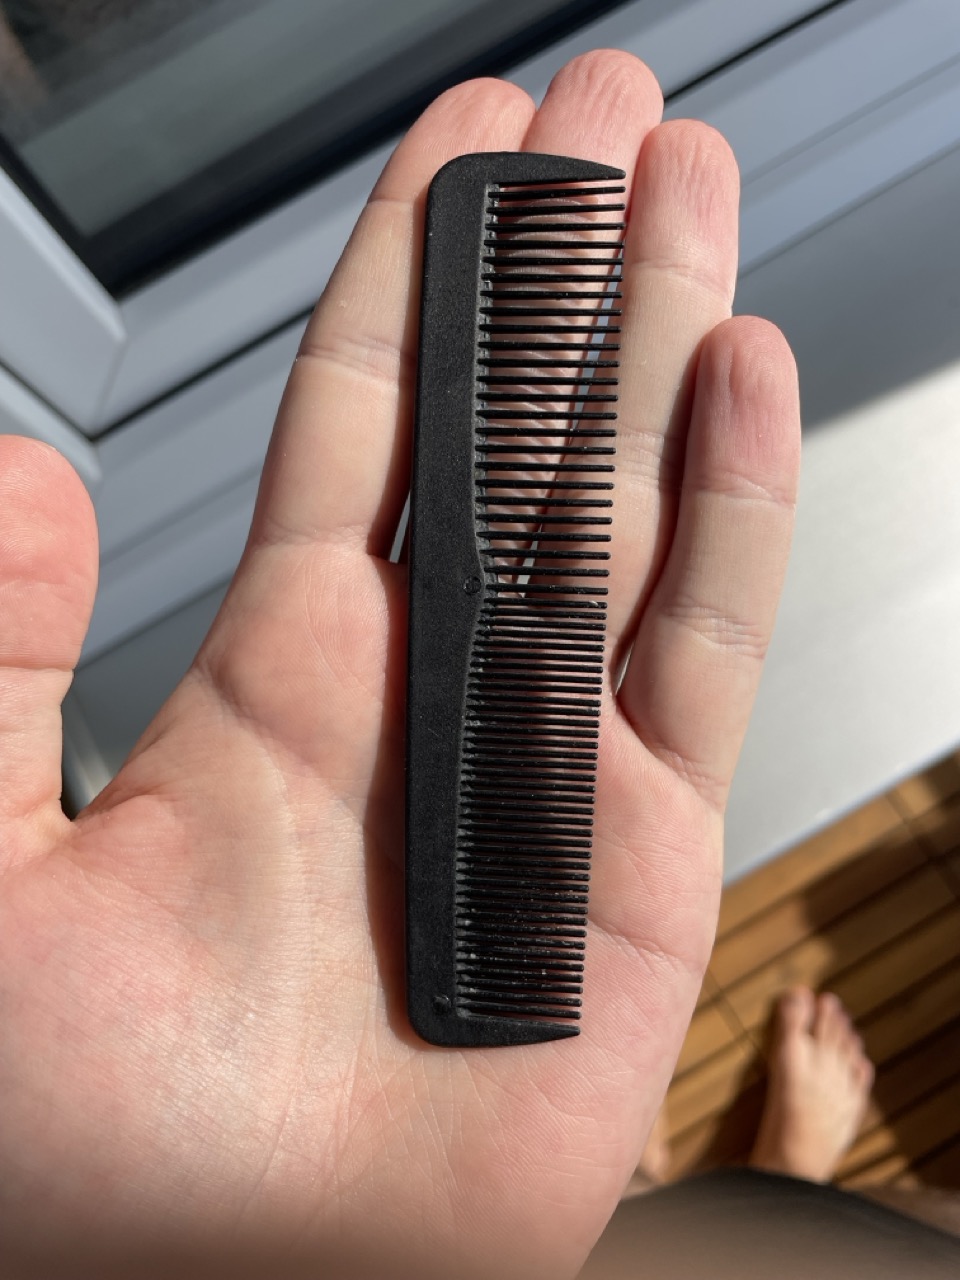 Small black comb